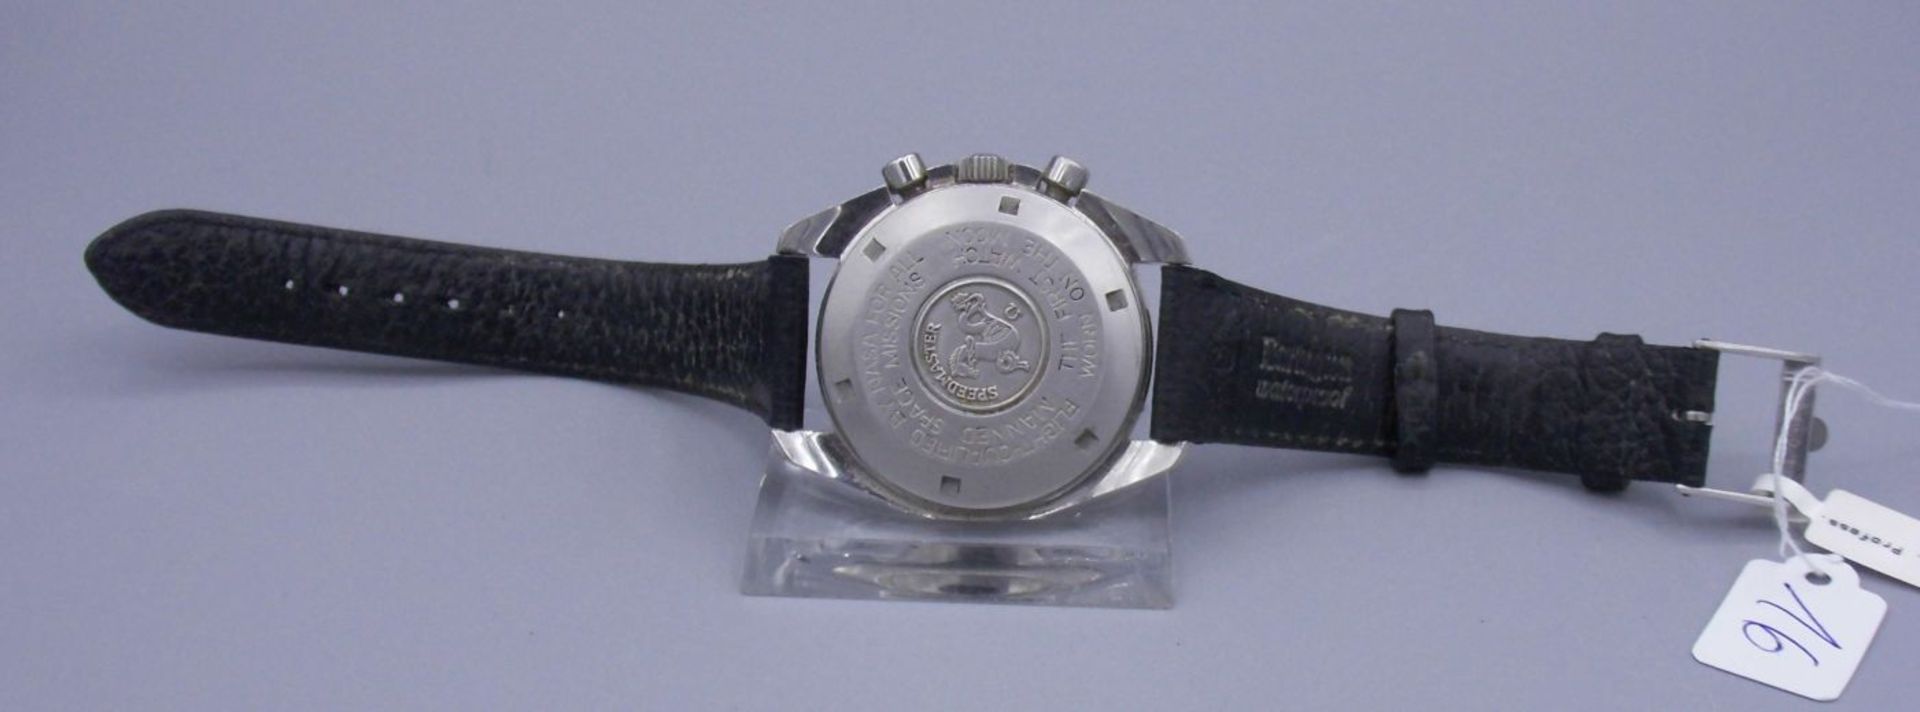 VINTAGE ARMBANDUHR / CHRONOGRAPH: OMEGA SPEEDMASTER PFROFESSIONAL - "MOONWATCH" / wristwatch, - Image 4 of 10